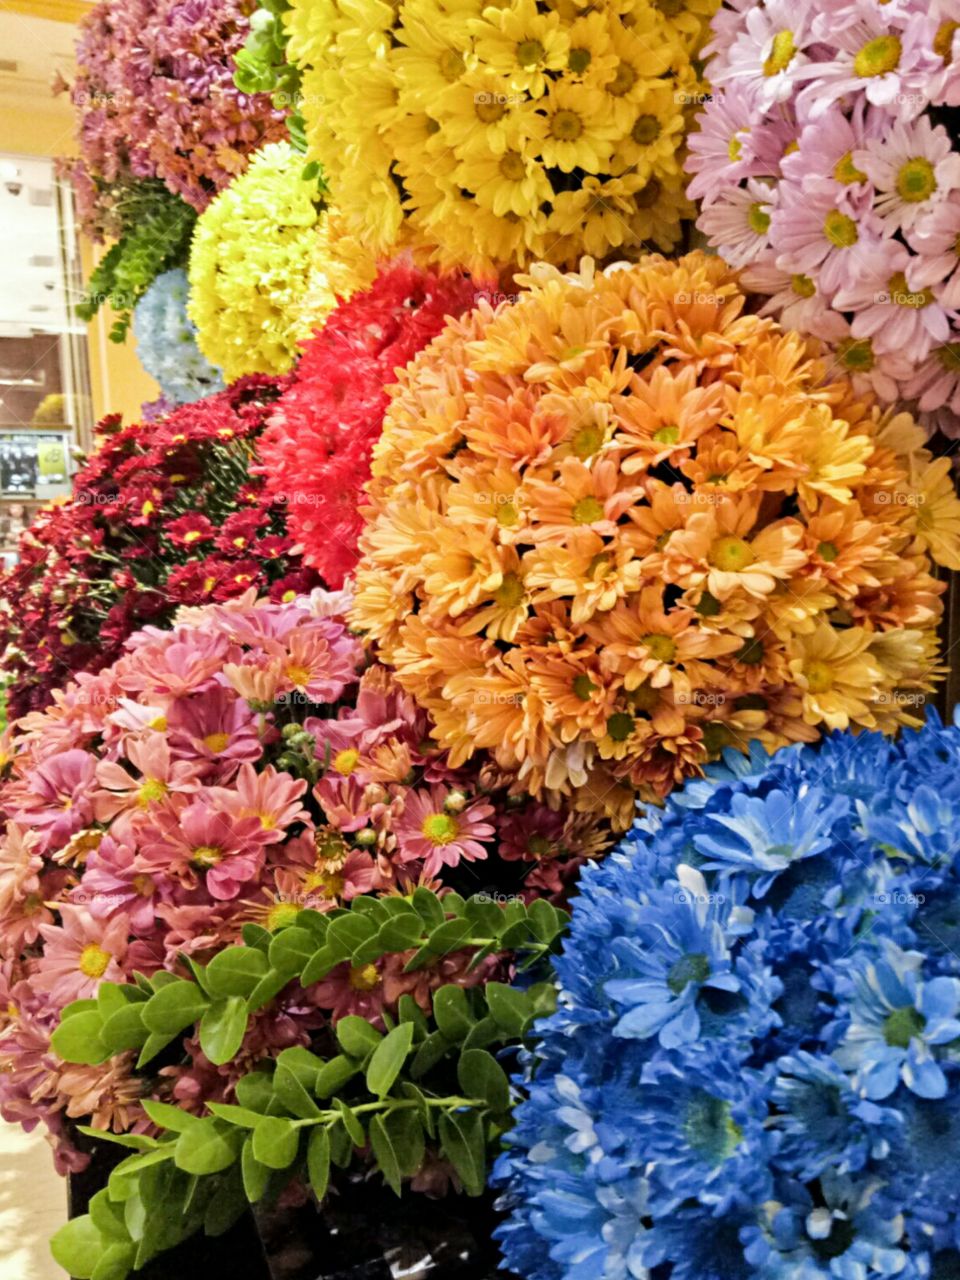 Chrysanthemum display of colors